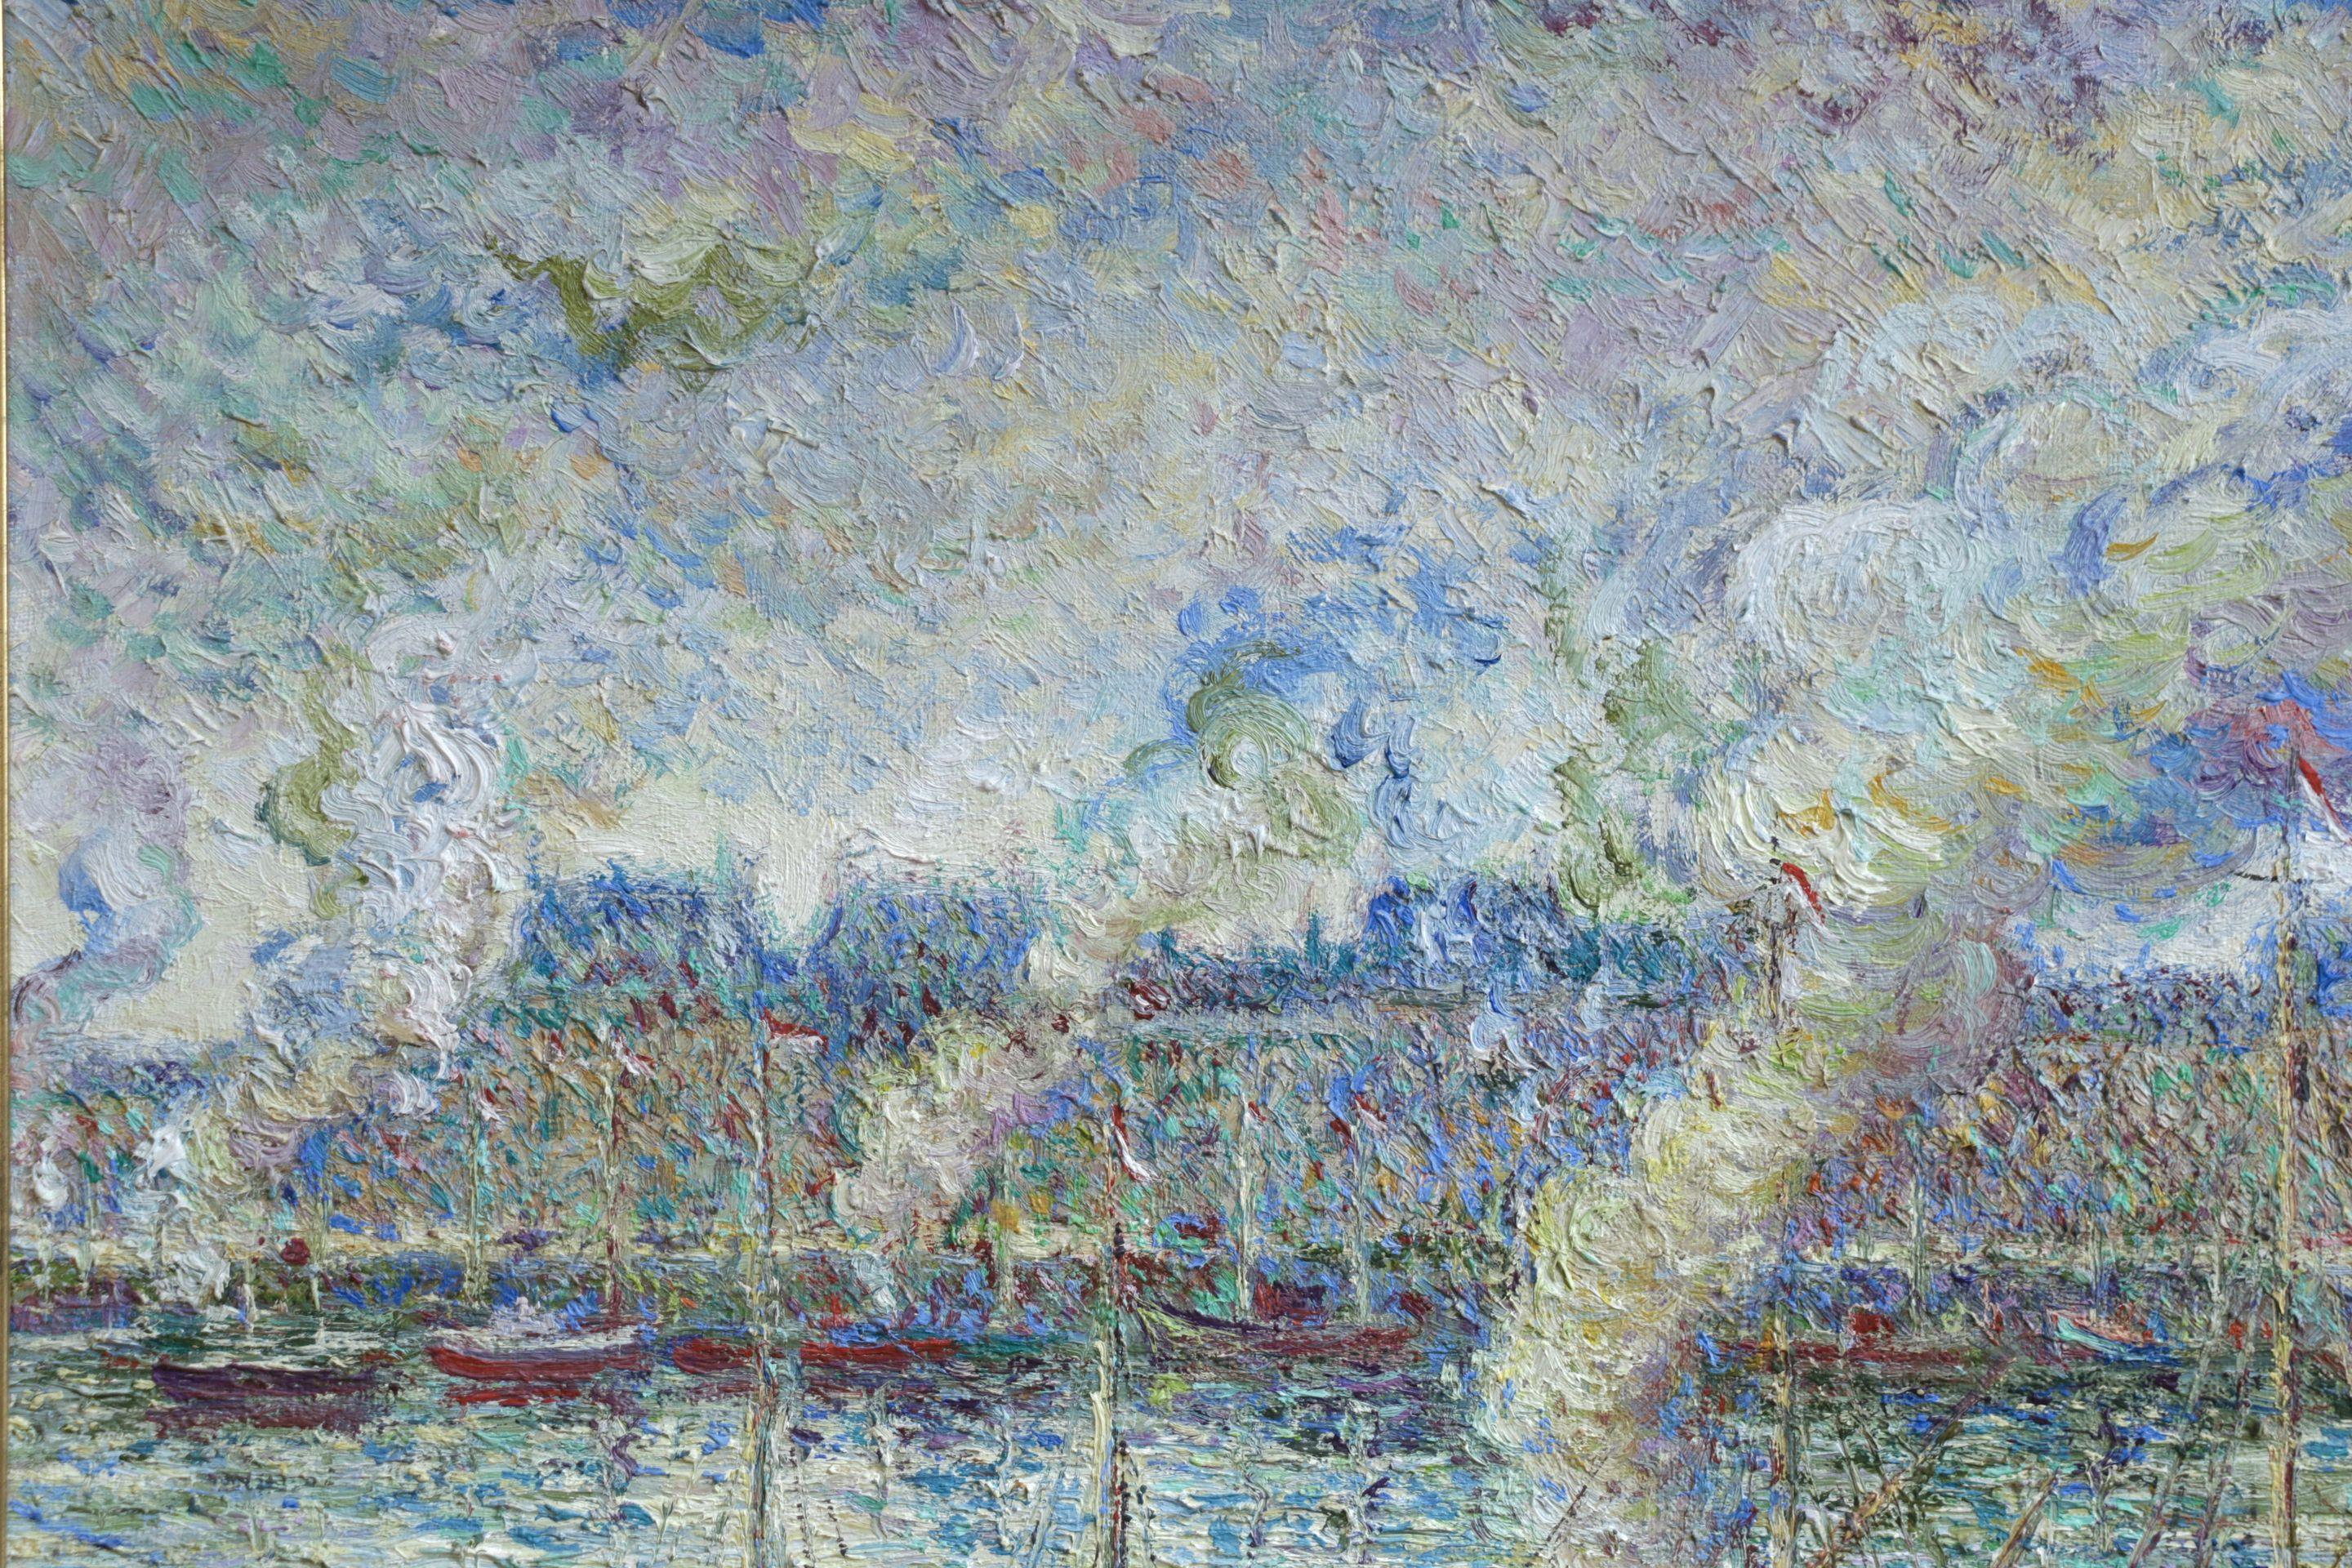 L'embarquement du Sainte Louisa-Paris - 20th Century Oil, Boats by H C Pissarro - Post-Impressionist Painting by Hughes Claude Pissarro